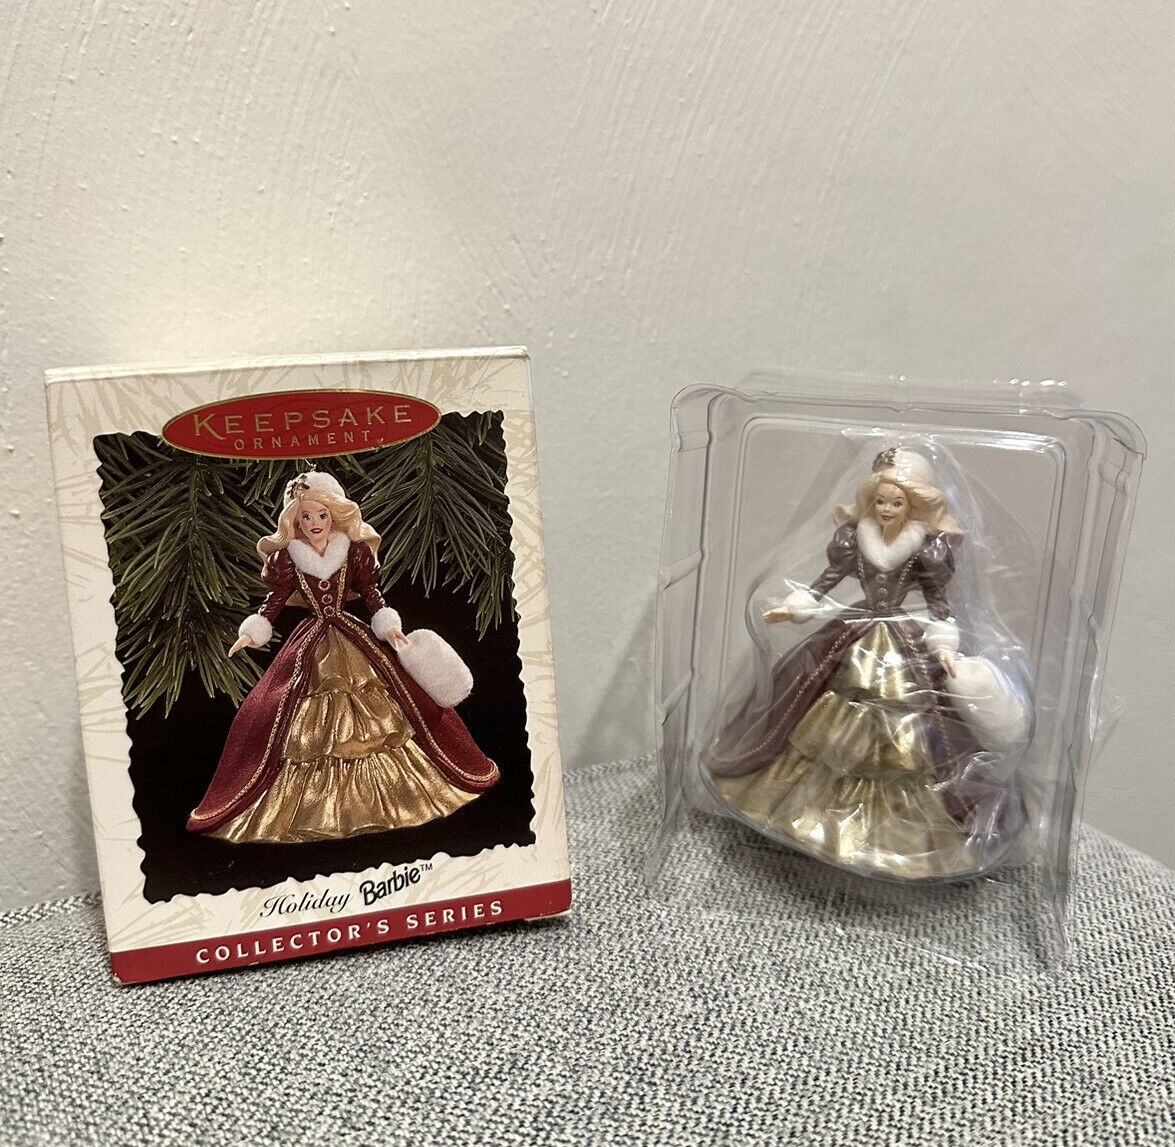 Hallmark Holiday Barbie 1996 Collectors Series Keepsake Christmas Ornament 4th